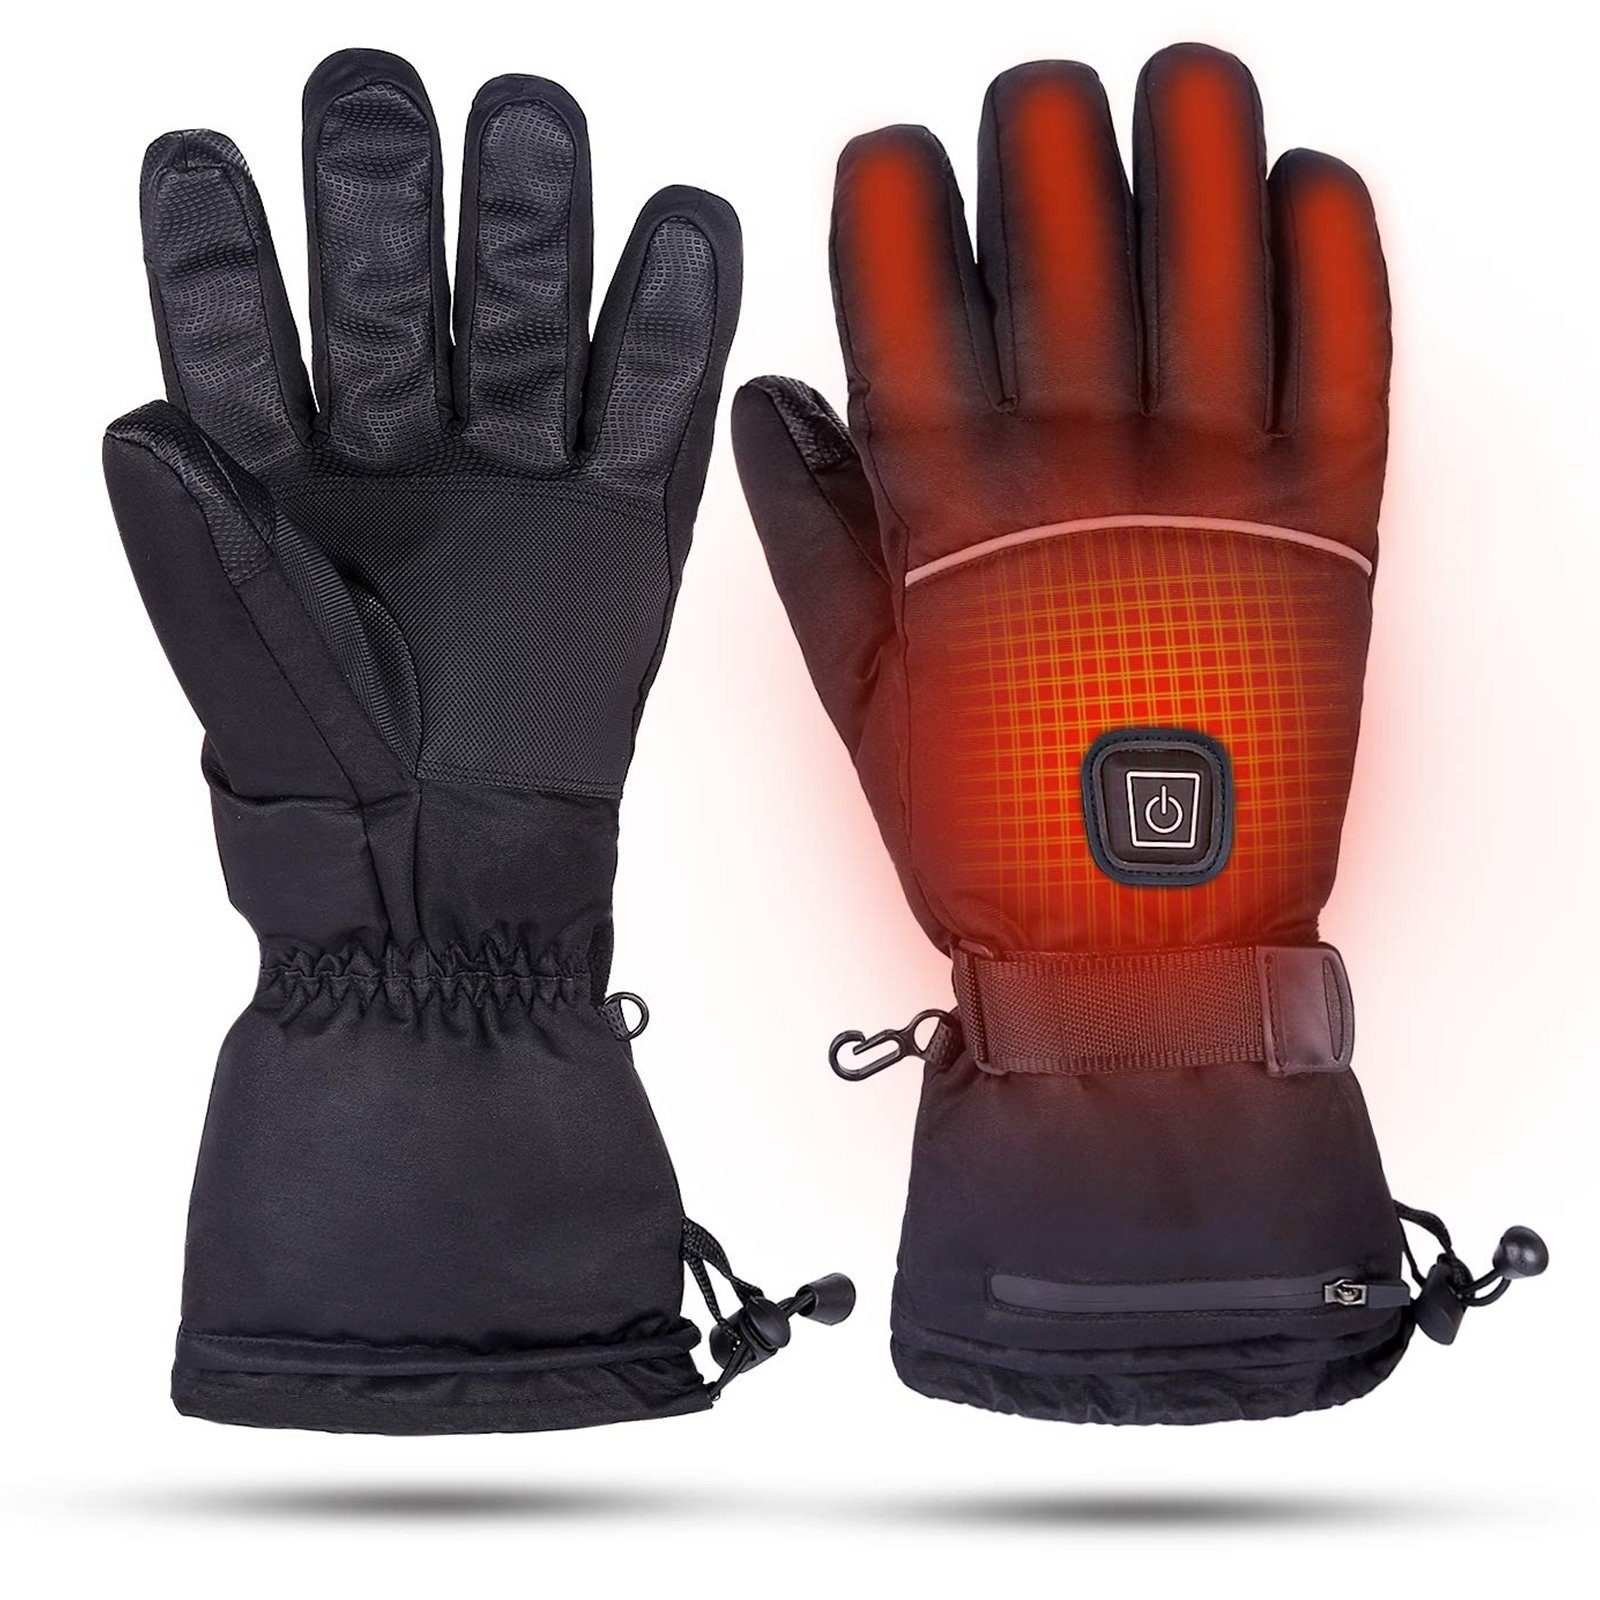 Wandern Jagd (1 wasserdicht, Batterie Ski Touchscreen, Rosnek 3 Paar) Elektriker-Handschuhe Stufen, Beheizt, für Winterarbeit